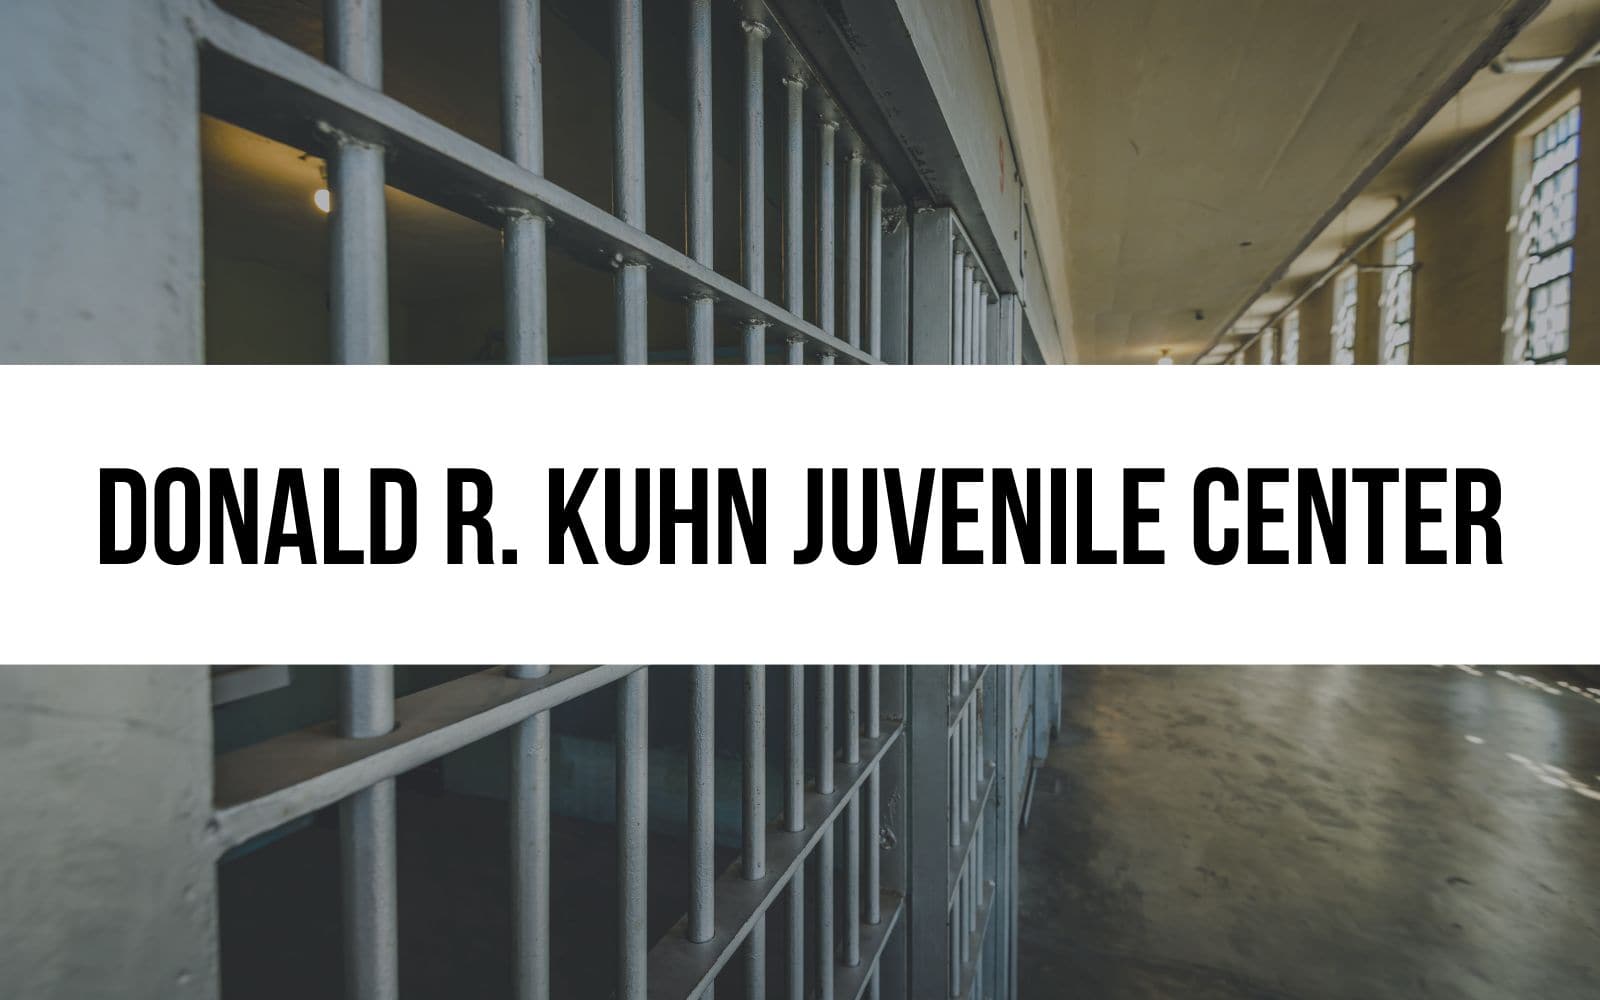 Donald R. Kuhn Juvenile Center